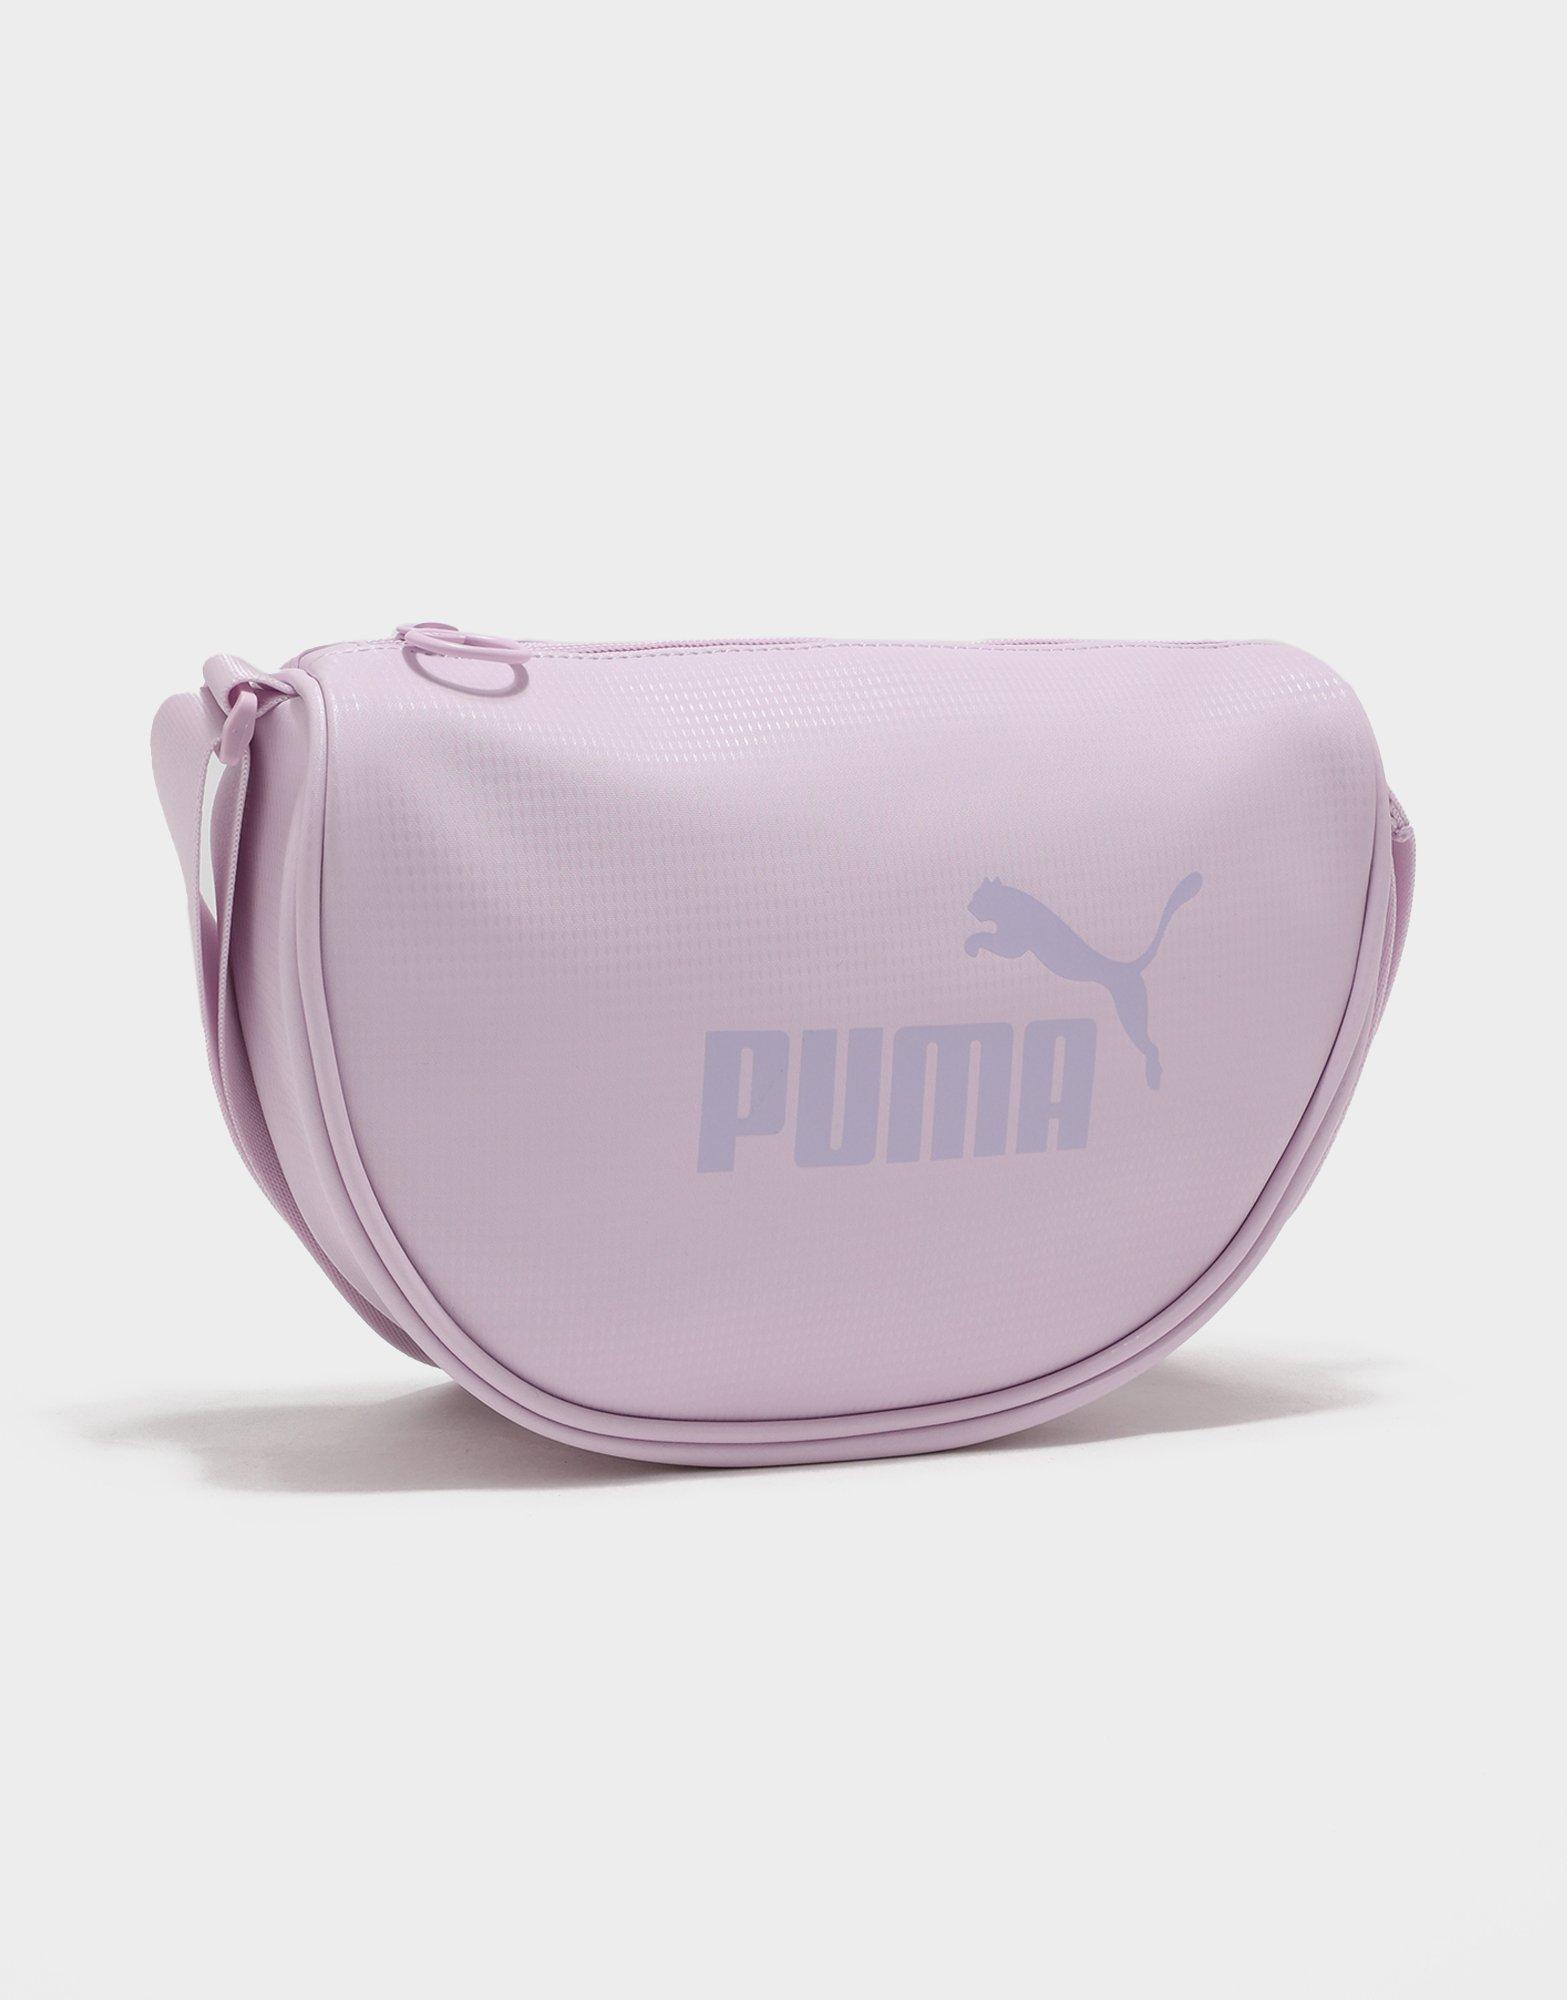 Purple Puma Core Up Half Moon Bag - JD Sports Singapore